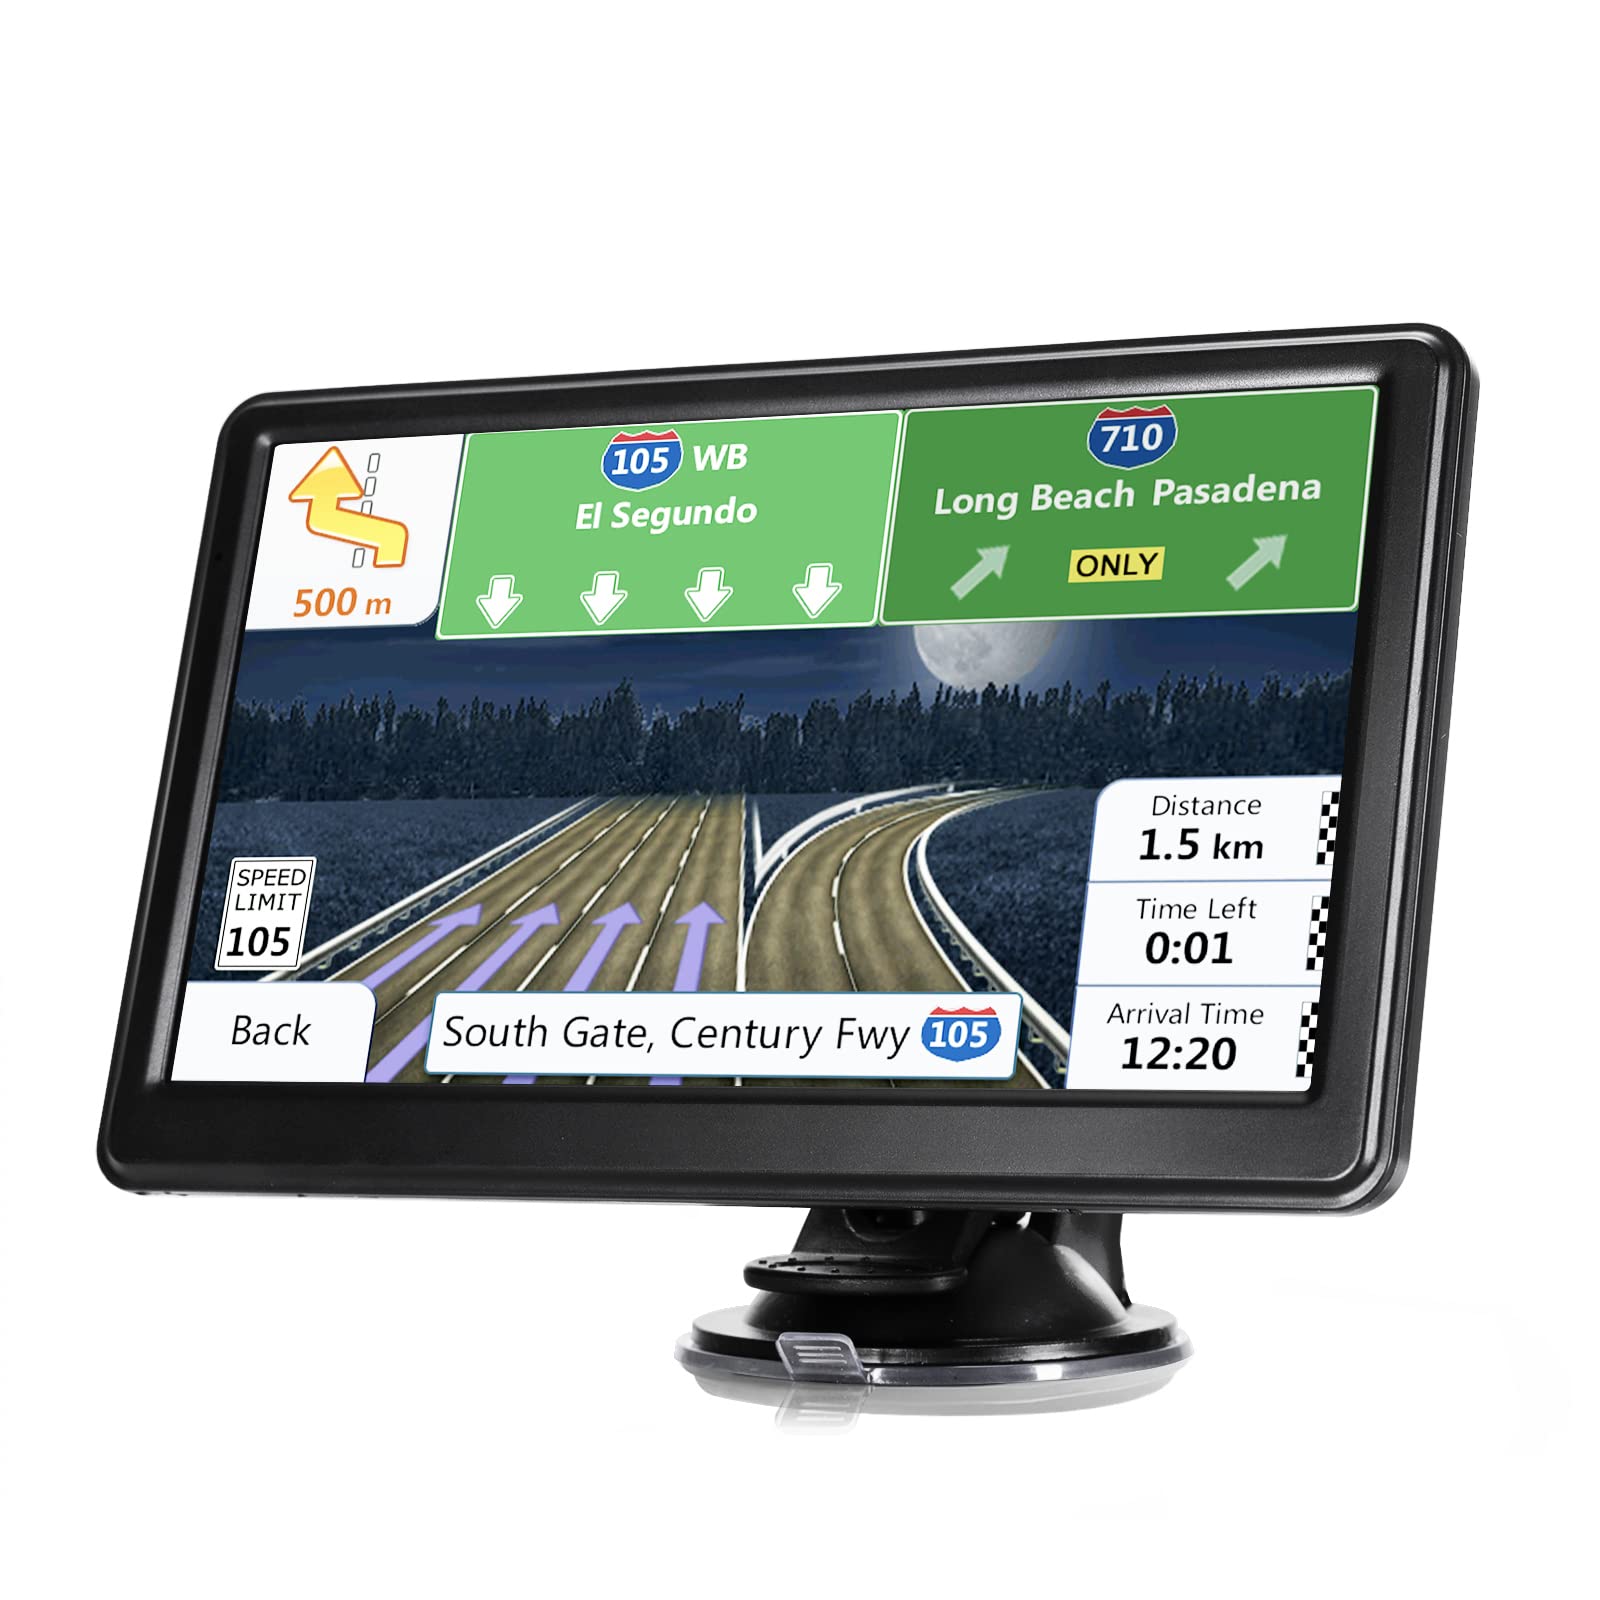 2022 Upgrade GPS Navigation for Car Truck 7 inch Touch Screen GPS Navigation System Free Lifetime Map Updates SpeedTraffi